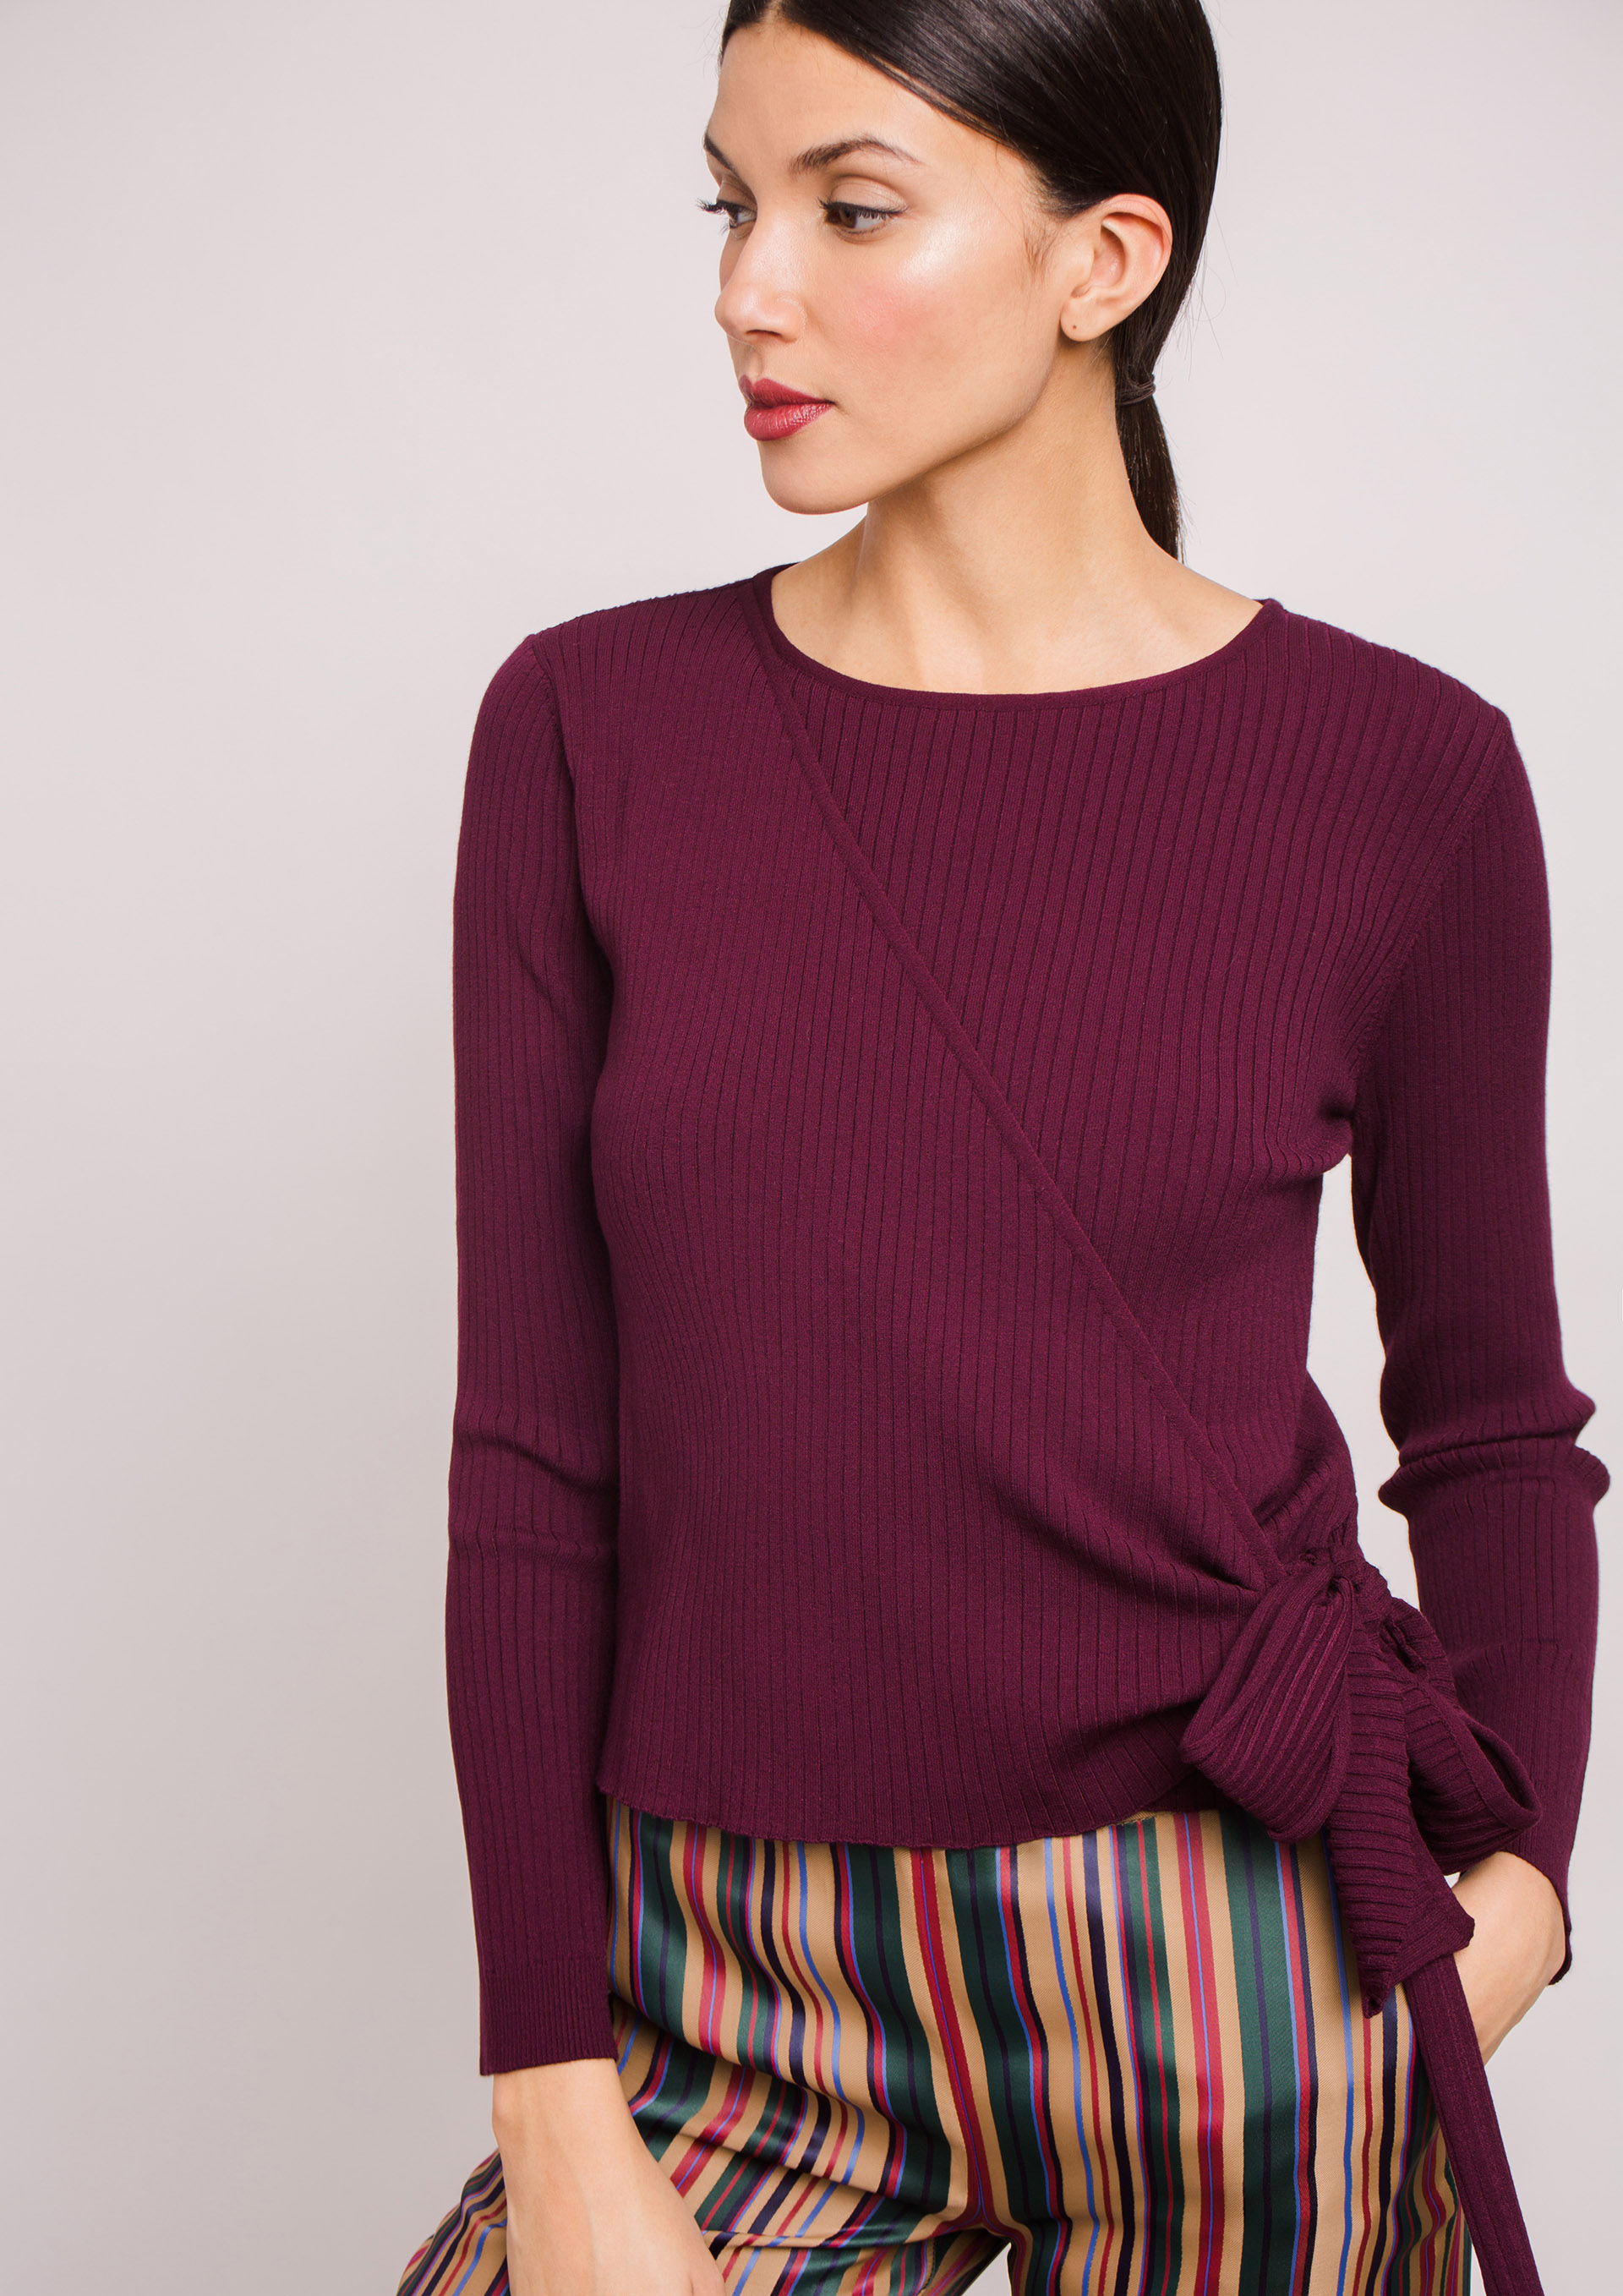 Fine knit sweater in aubergine.